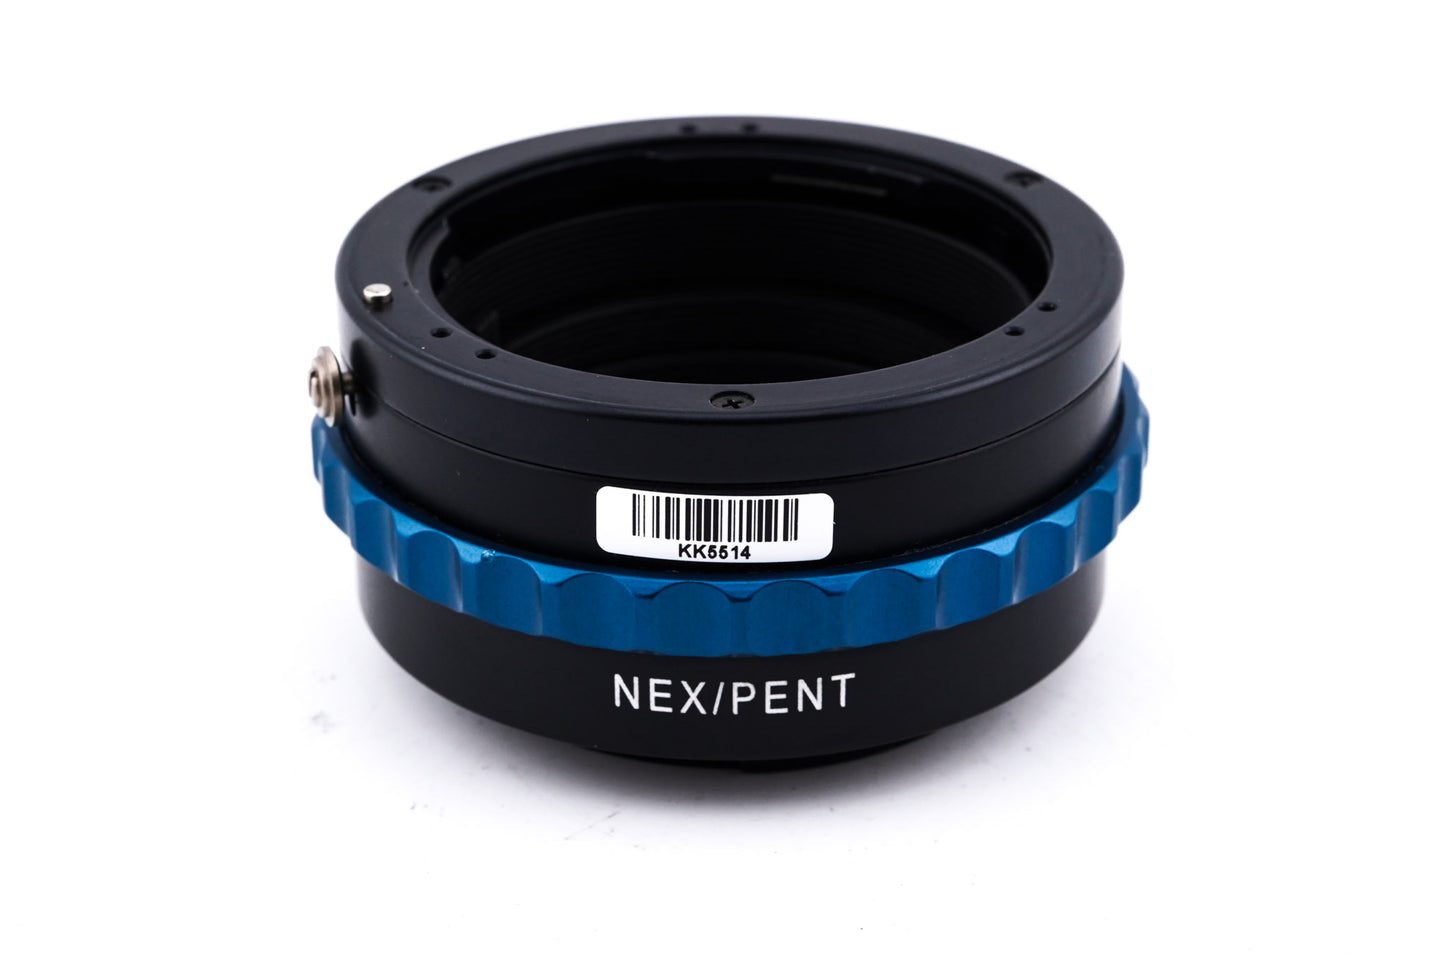 Novoflex Pentax K - Sony E (NEX/PENT) Adapter